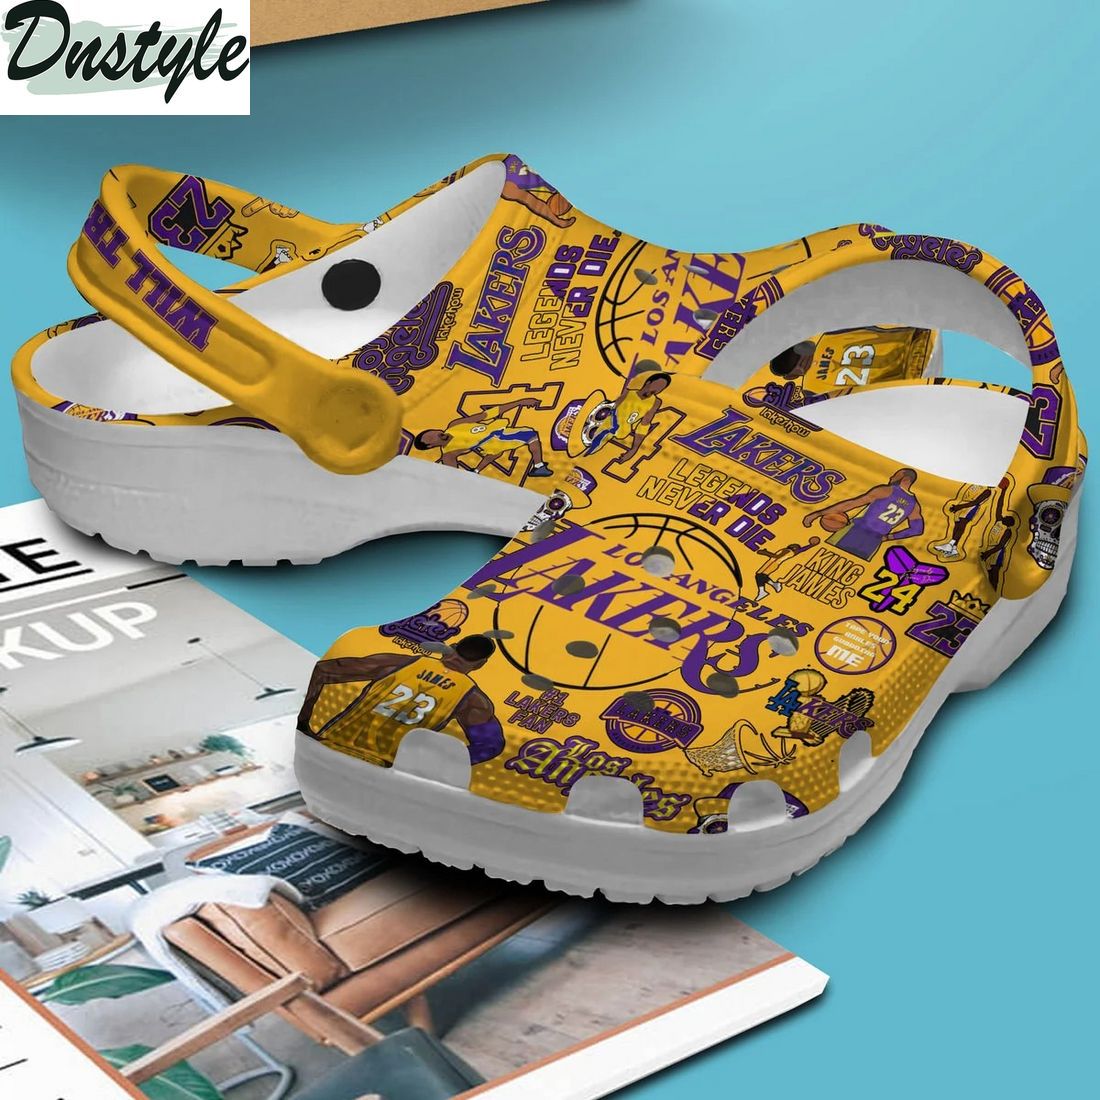 Los Angeles Lakers NBA Crocs Crocband Clogs Shoes